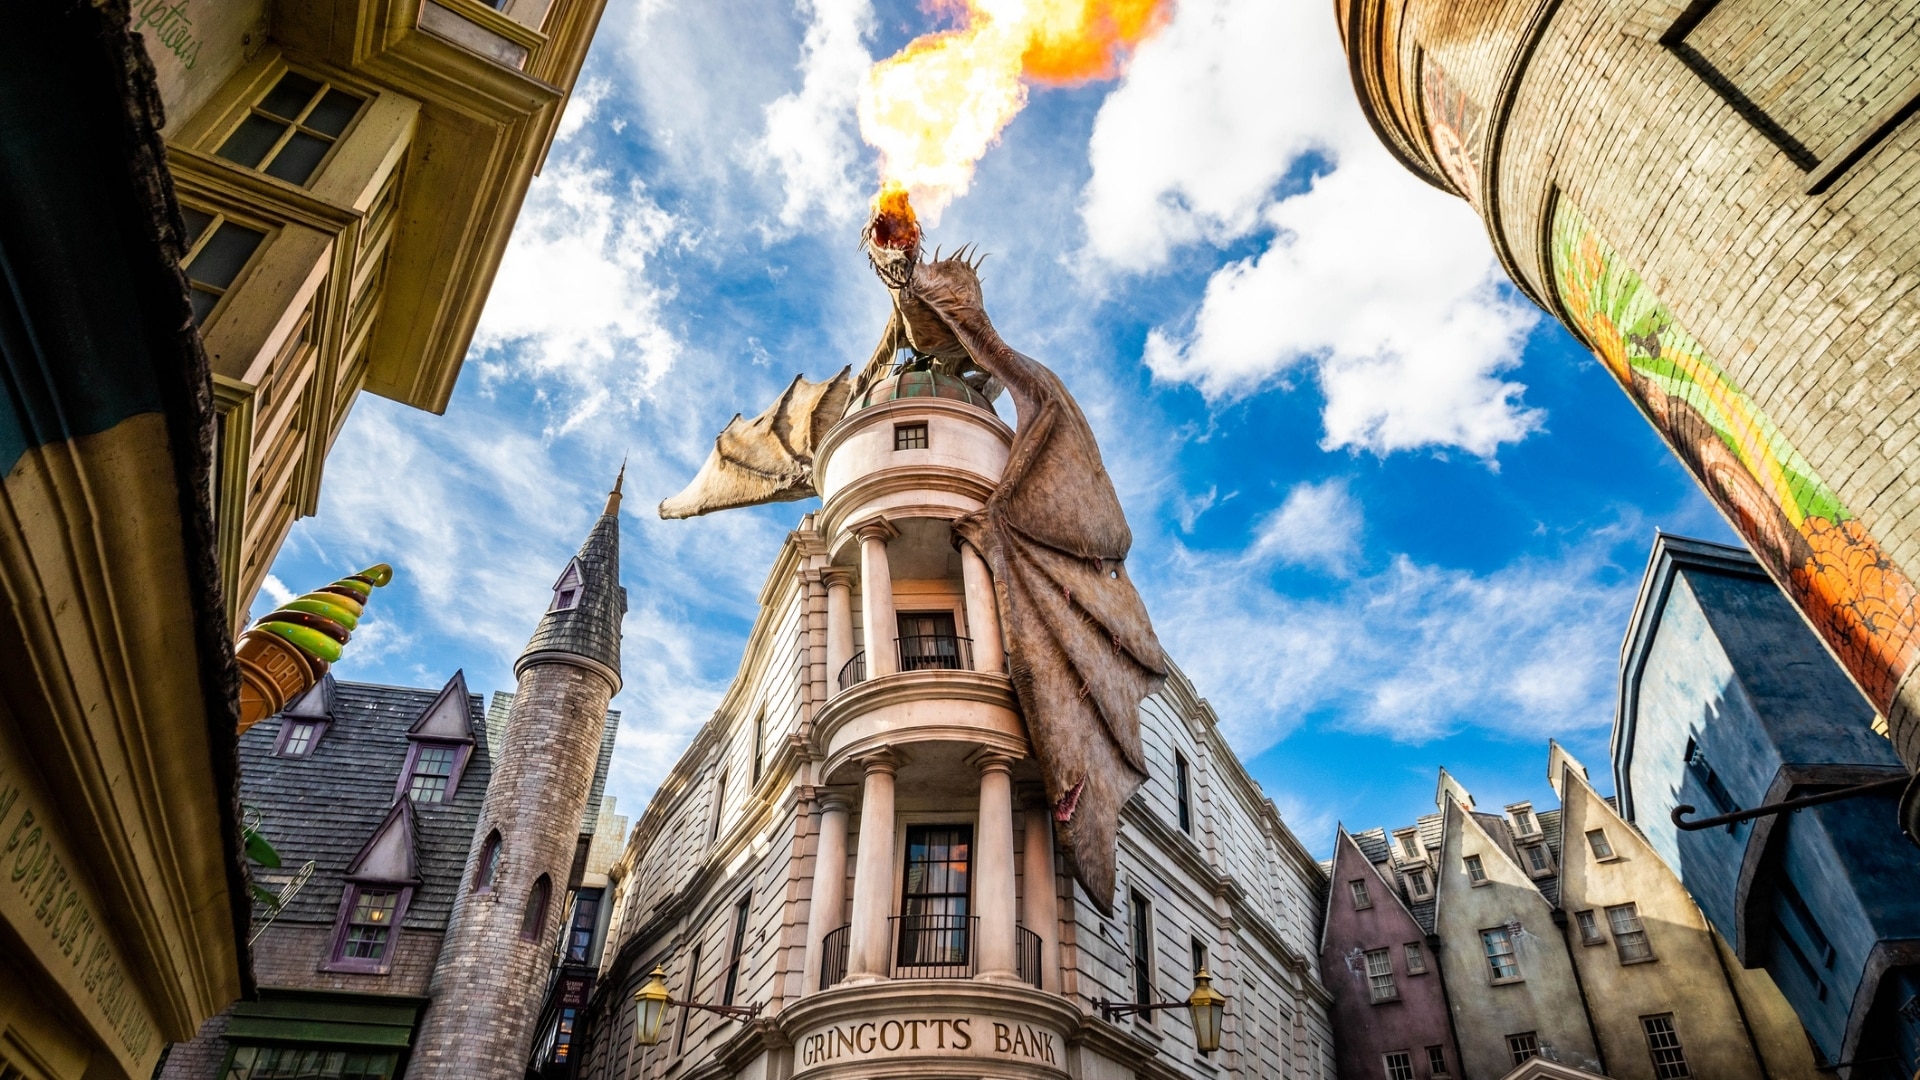 Diagon Alley Fire Dragon - Universal Studios Orlando